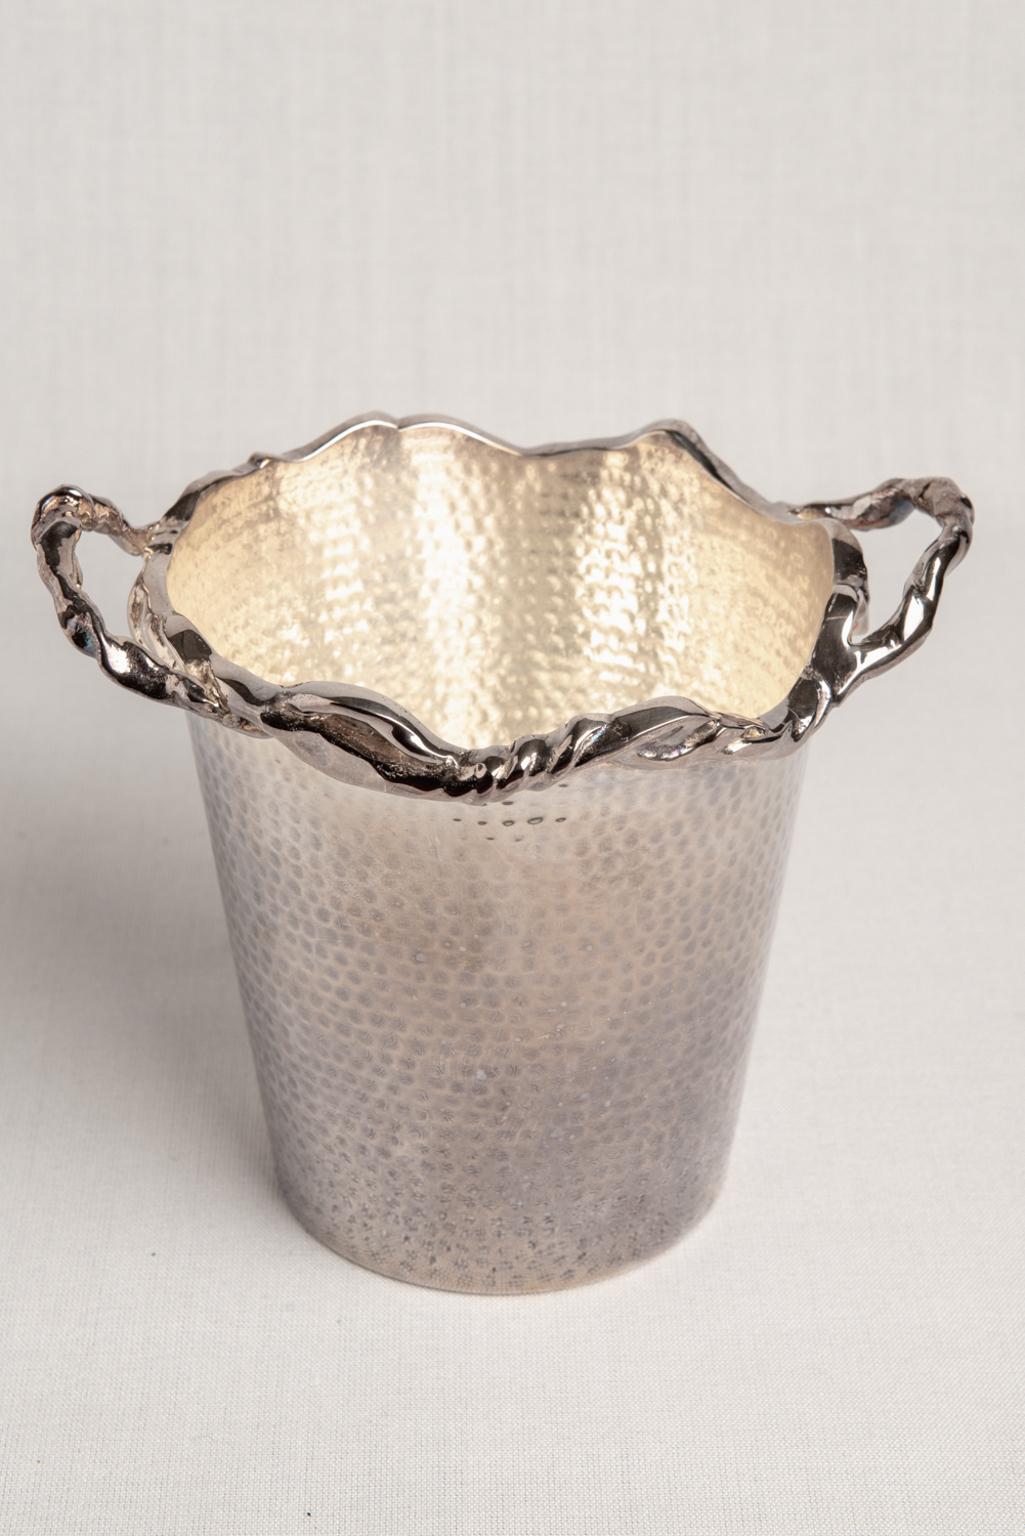 Beautiful ice bucket from the famous artisti Michael Aram - an idea for Christmas gift -
O/5921.